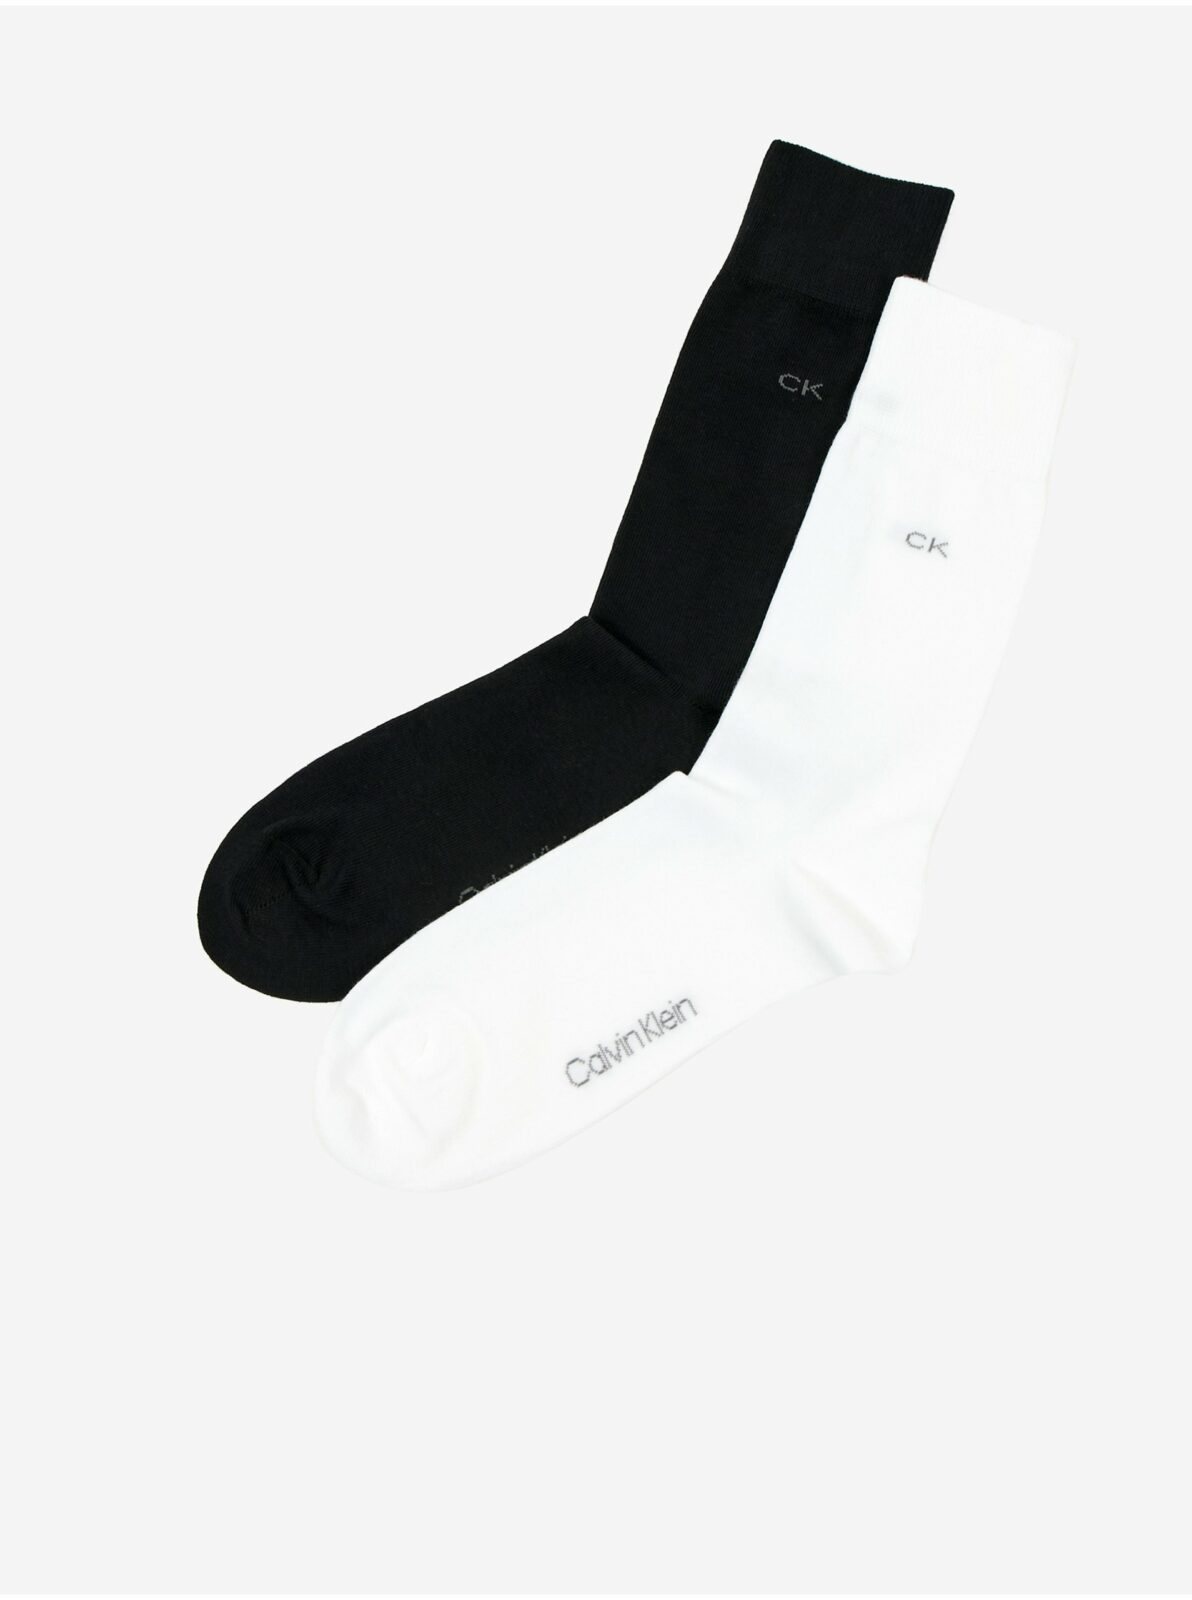 Sada dvou párů pánských ponožek v bílé a černé